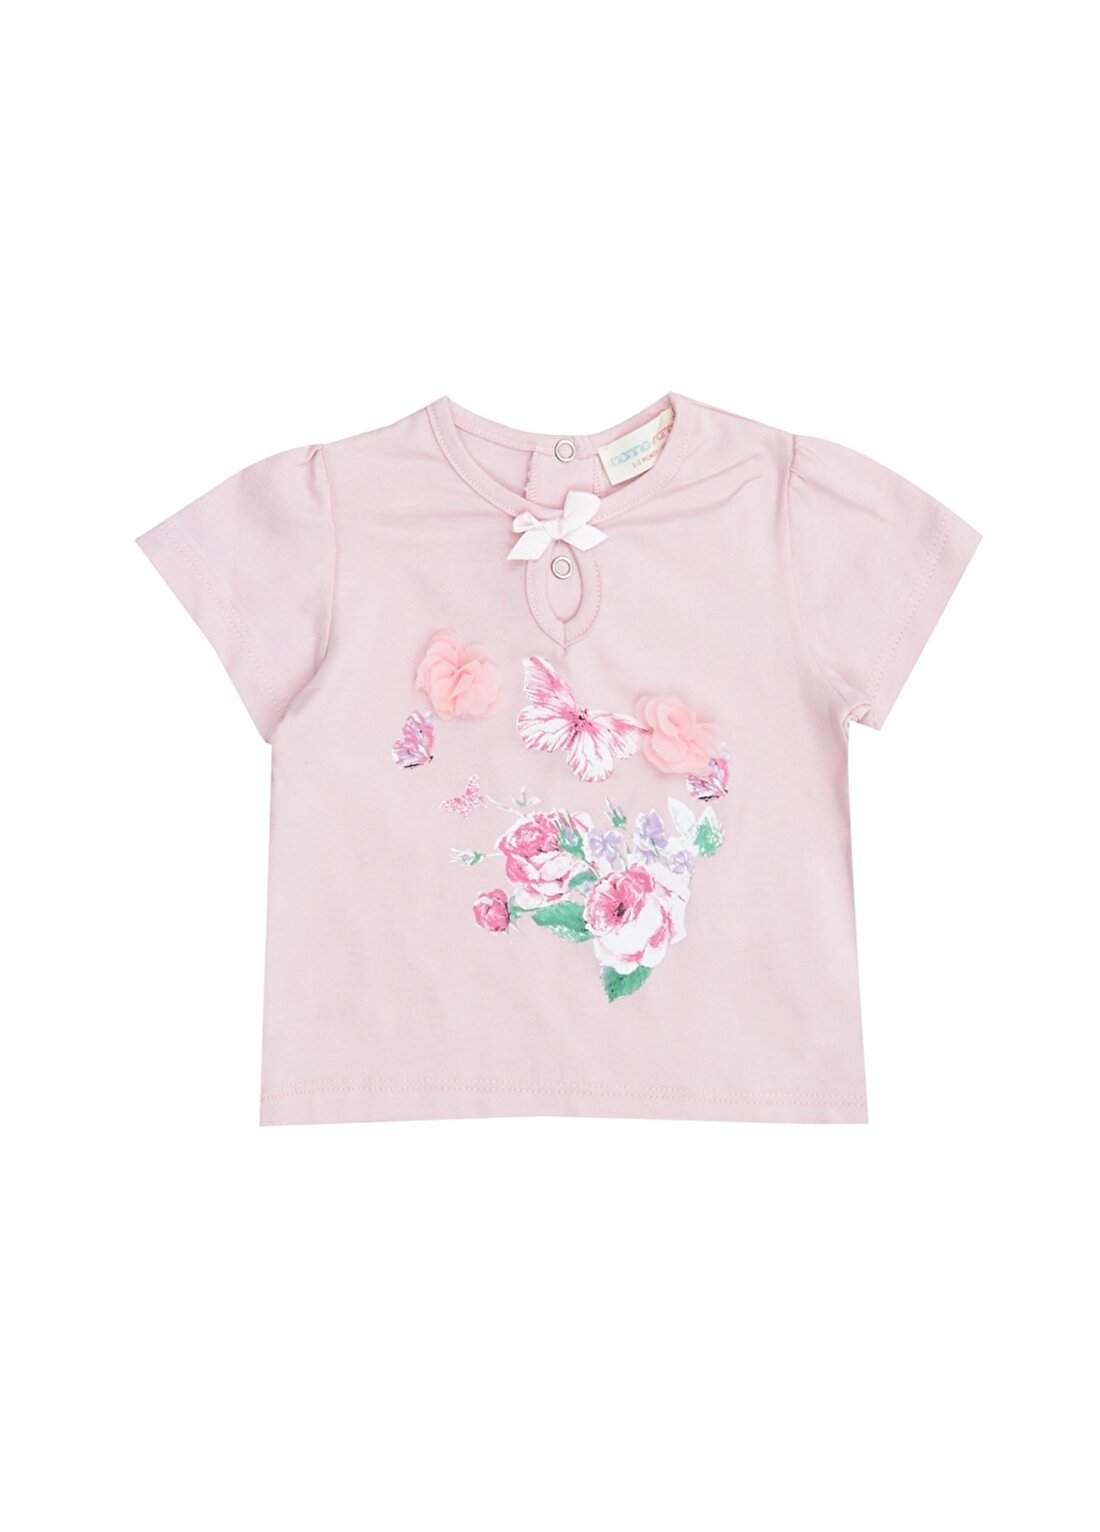 Mammaramma FBL013 Pembe Çiçek Baskılı Kız Bebek T-Shirt